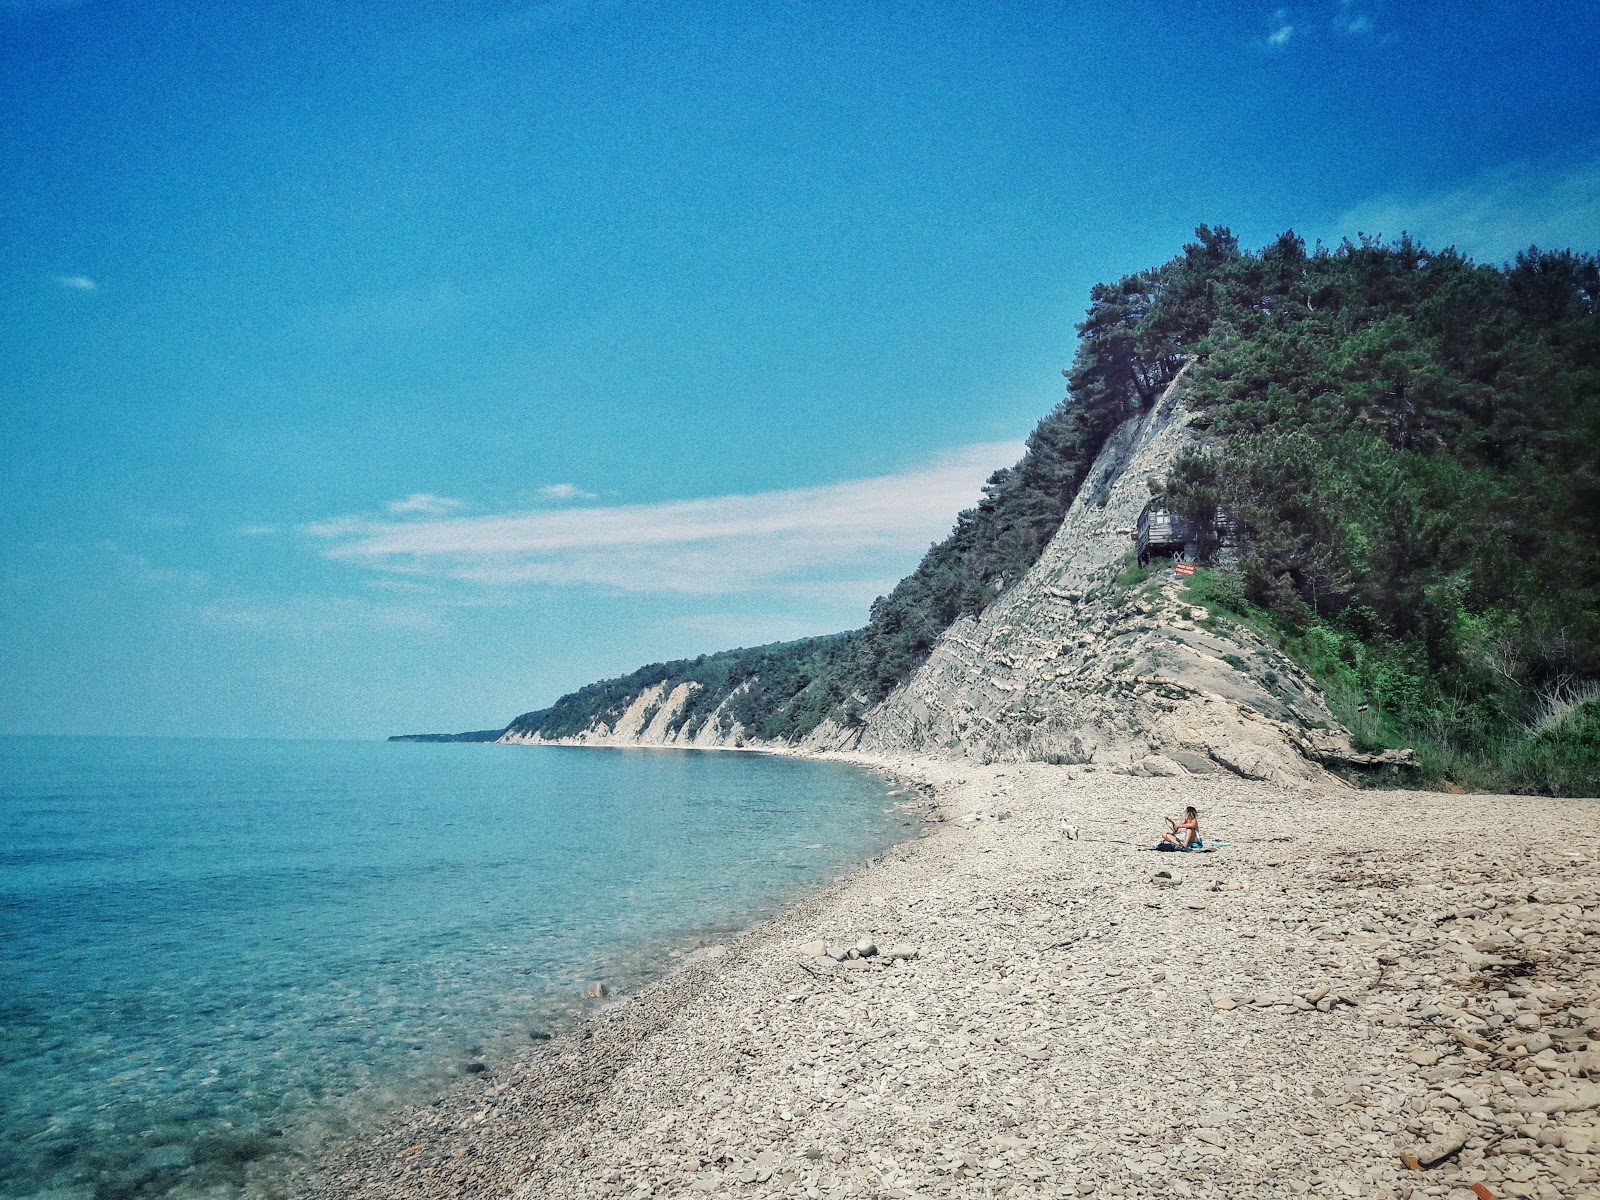 Foto di Nazarova dacha beach ubicato in zona naturale